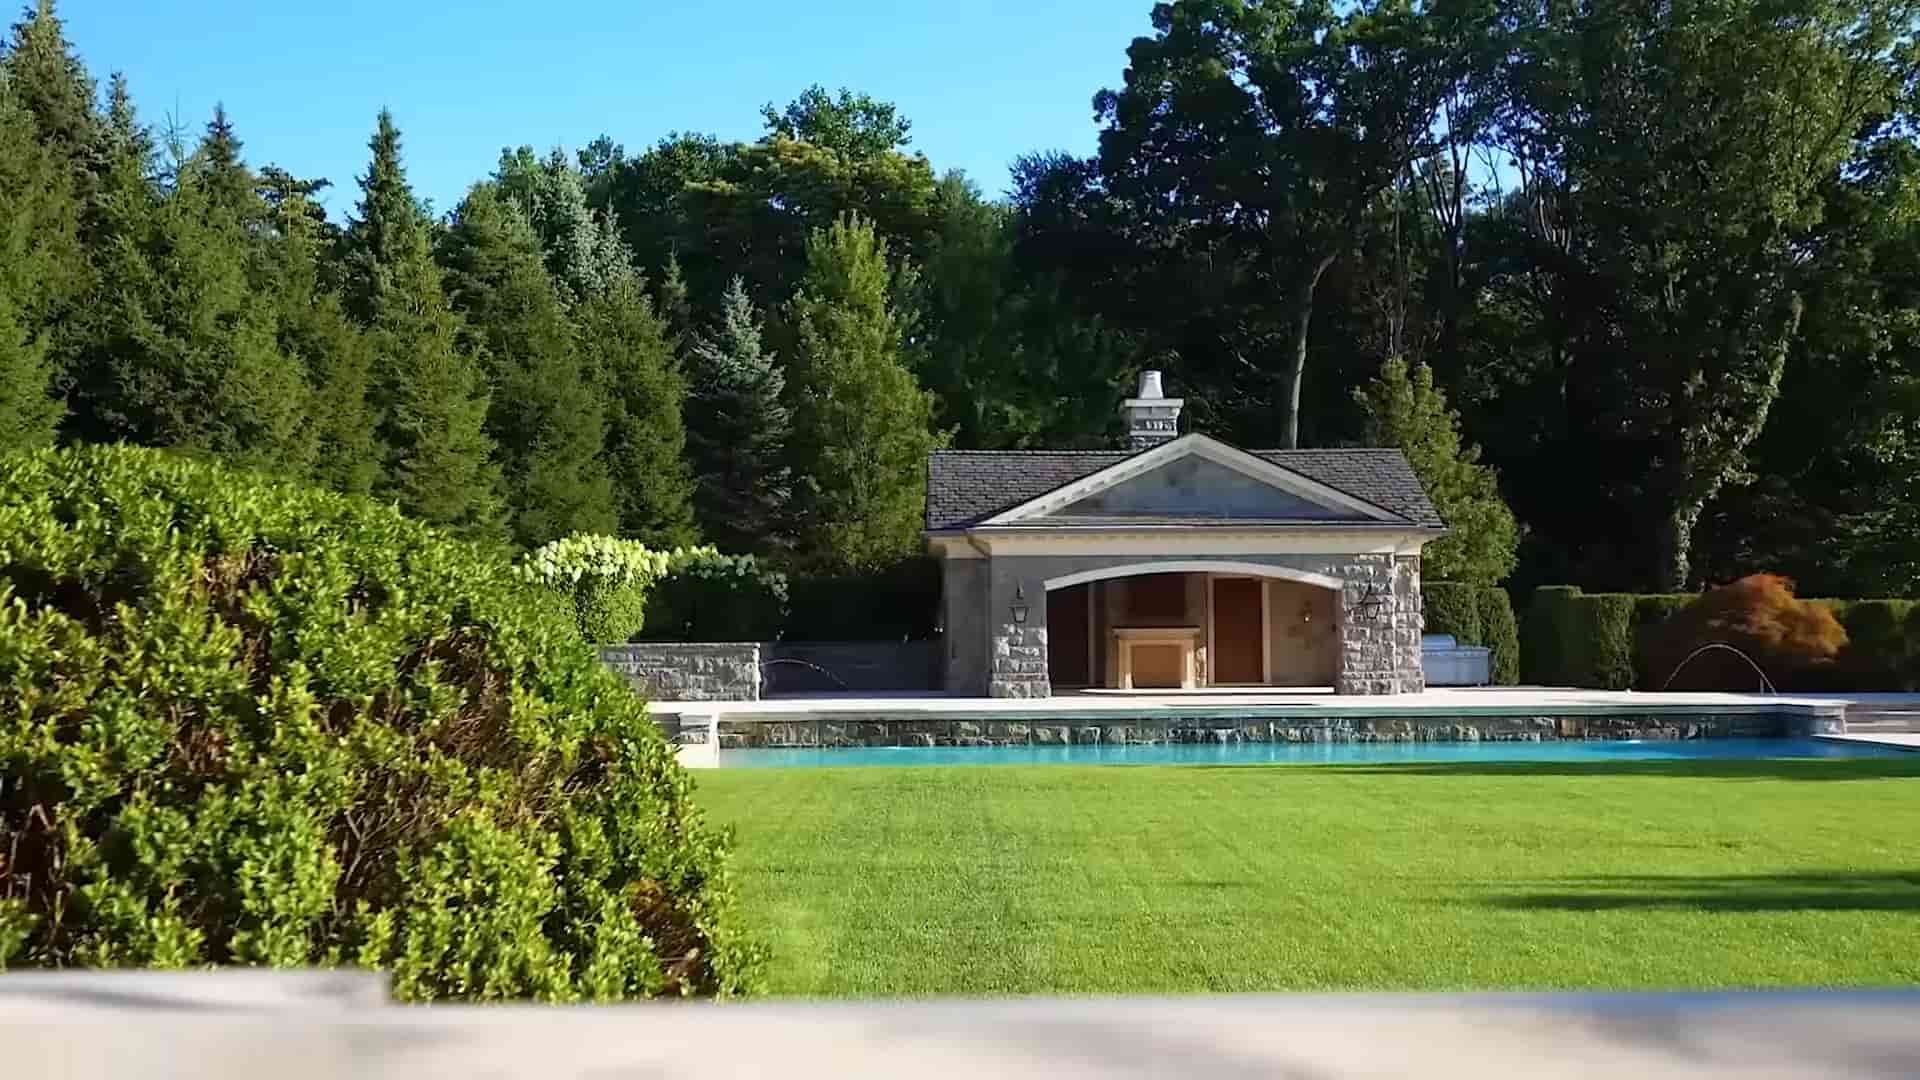 Howard Stern’s pool house